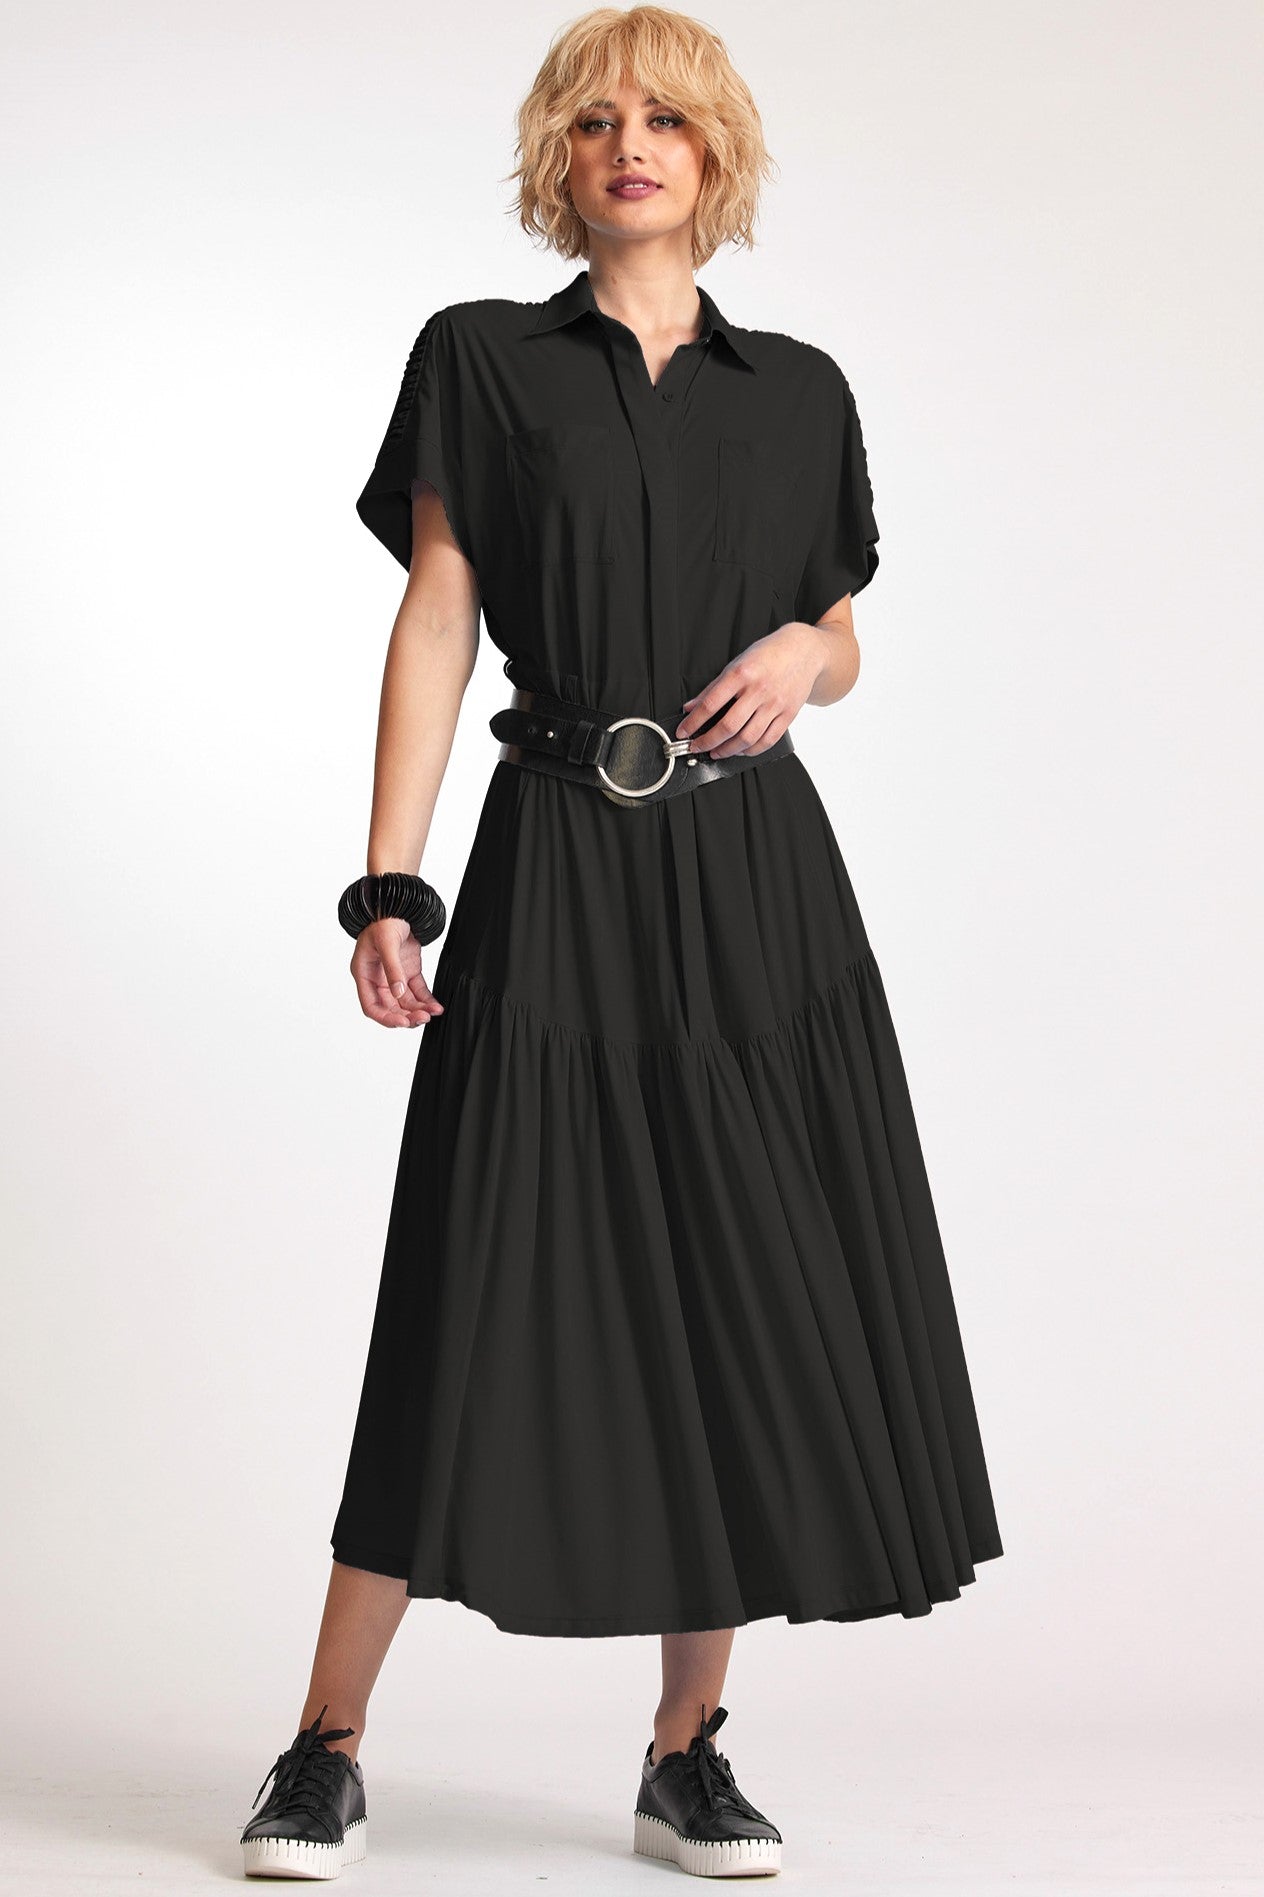 PAULA RYAN Rouched Cap Sleeve Dress - Black - Paula Ryan